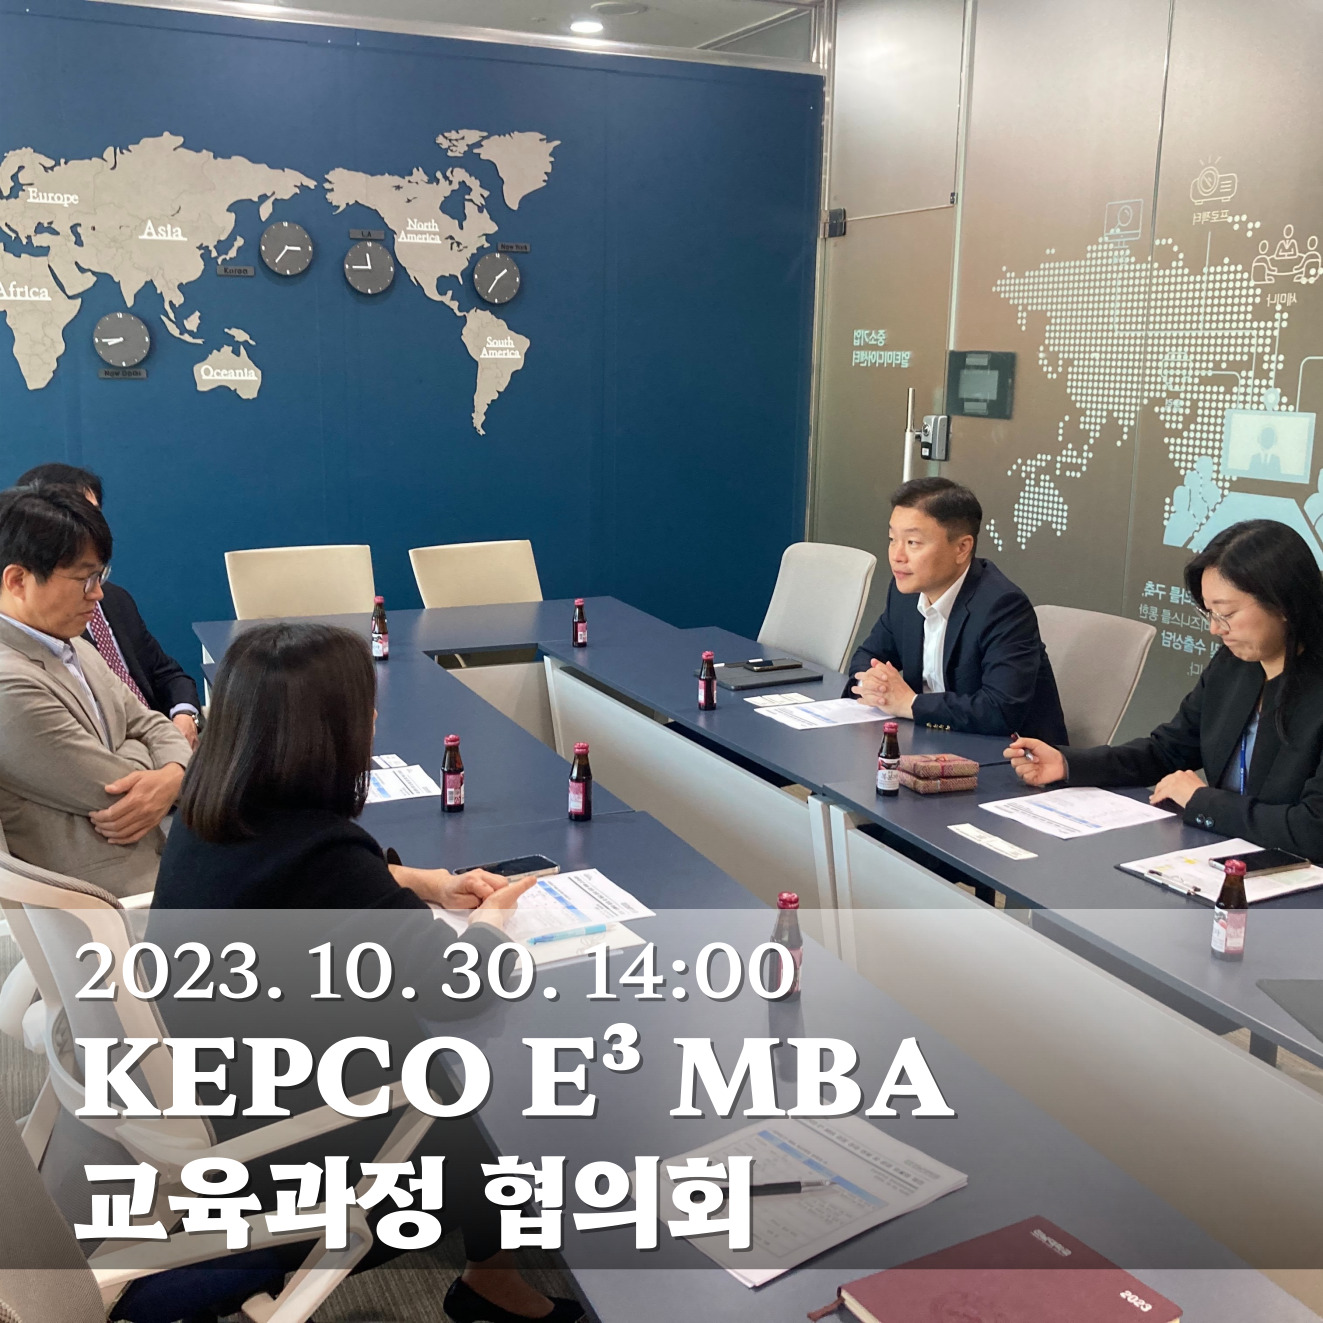 KEPCO E³ MBA 교육과정 협의회 대표이미지